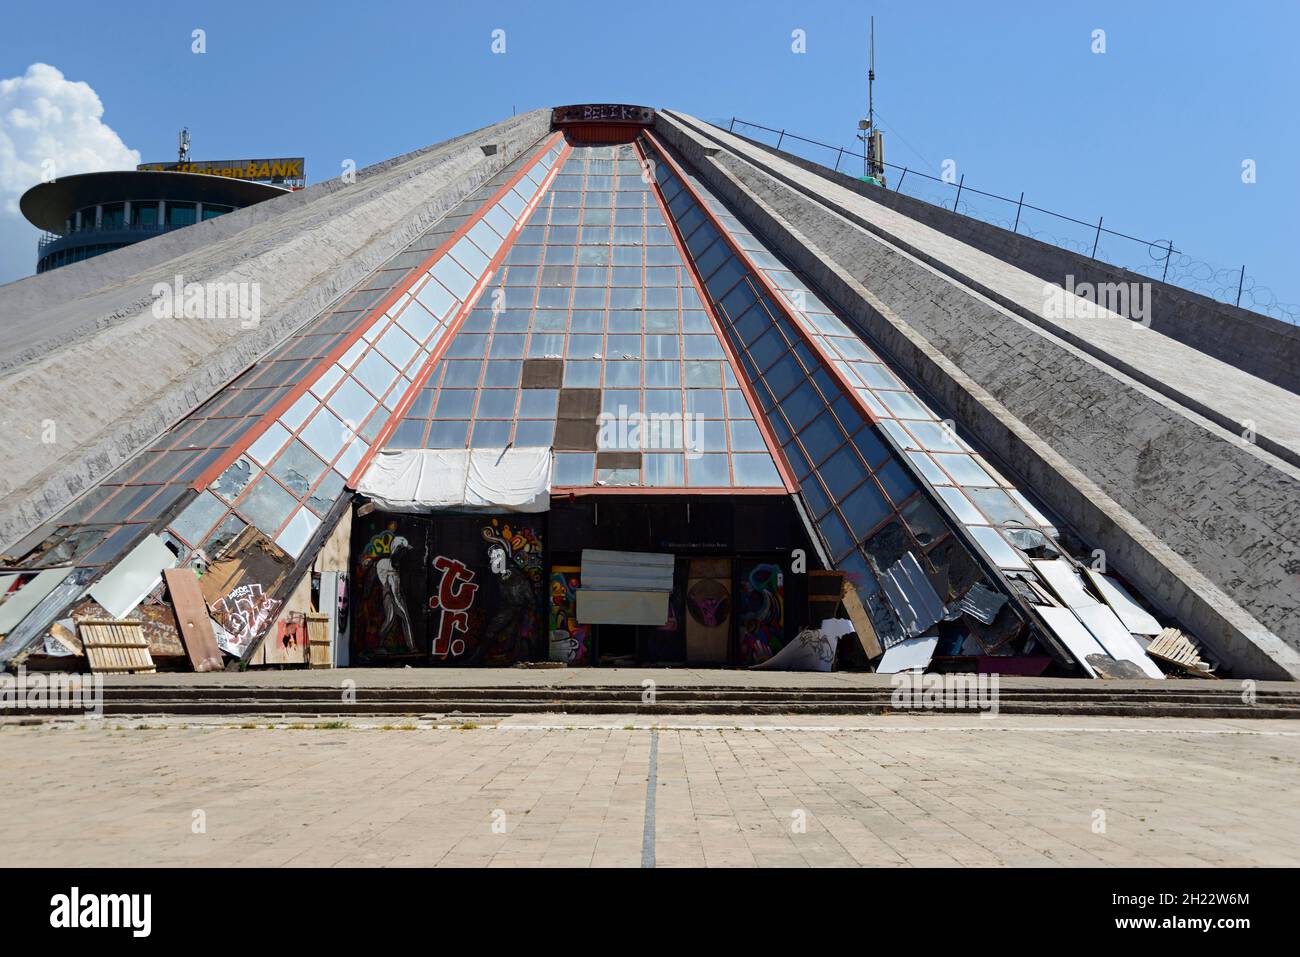 Piramida, The Pyramid, former Enver Hoxha Museum, then cultural centre, now Top Channel TV station, Tirana, Albania Stock Photo